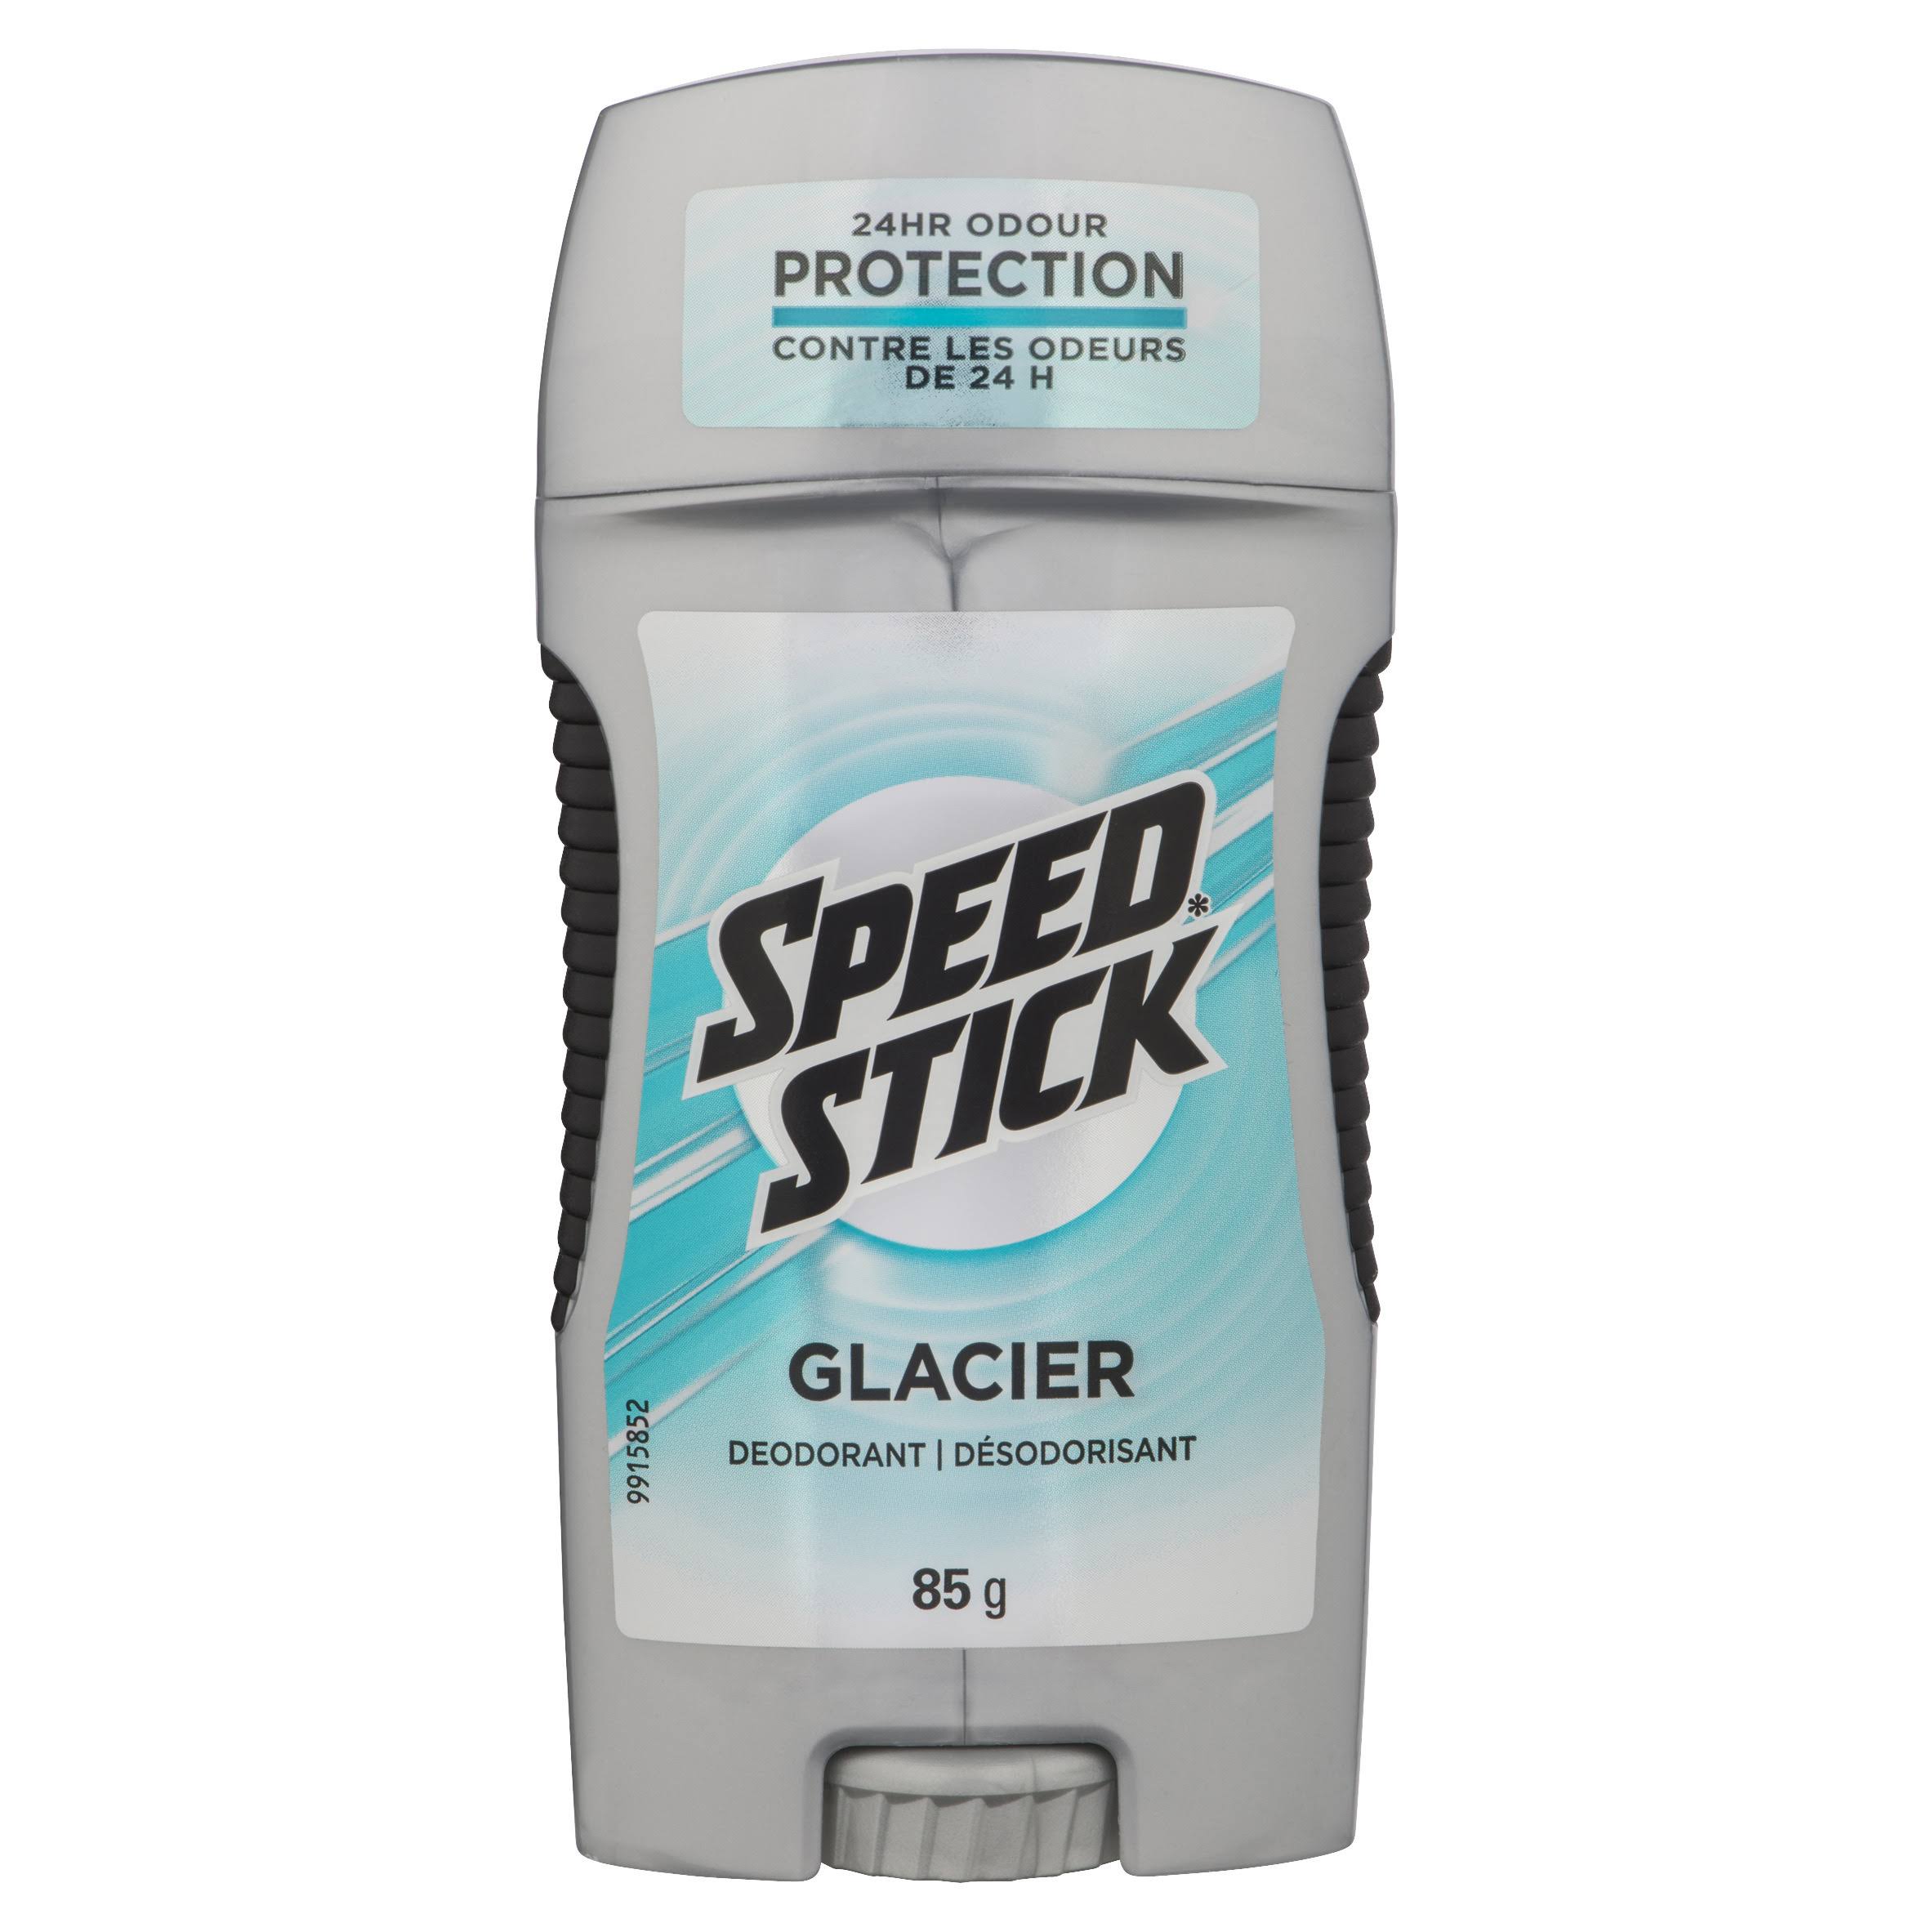 Speed Stick CLR Deodorant - Glacier, 92g